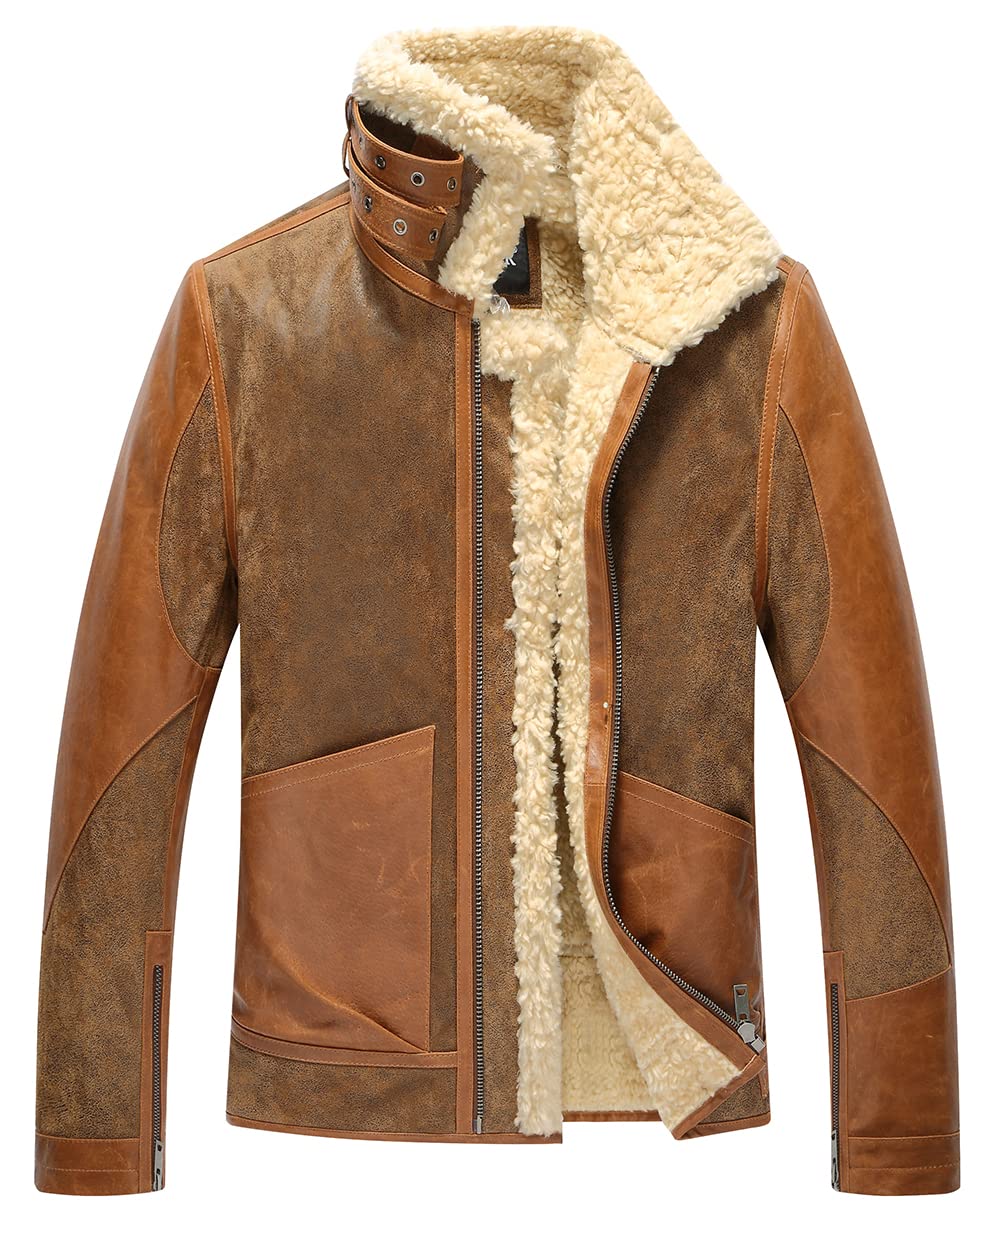 FLAVOR Mens Leather Bomber Jacket Warm Piolt Winter Shearling Jackets Aviator Coat